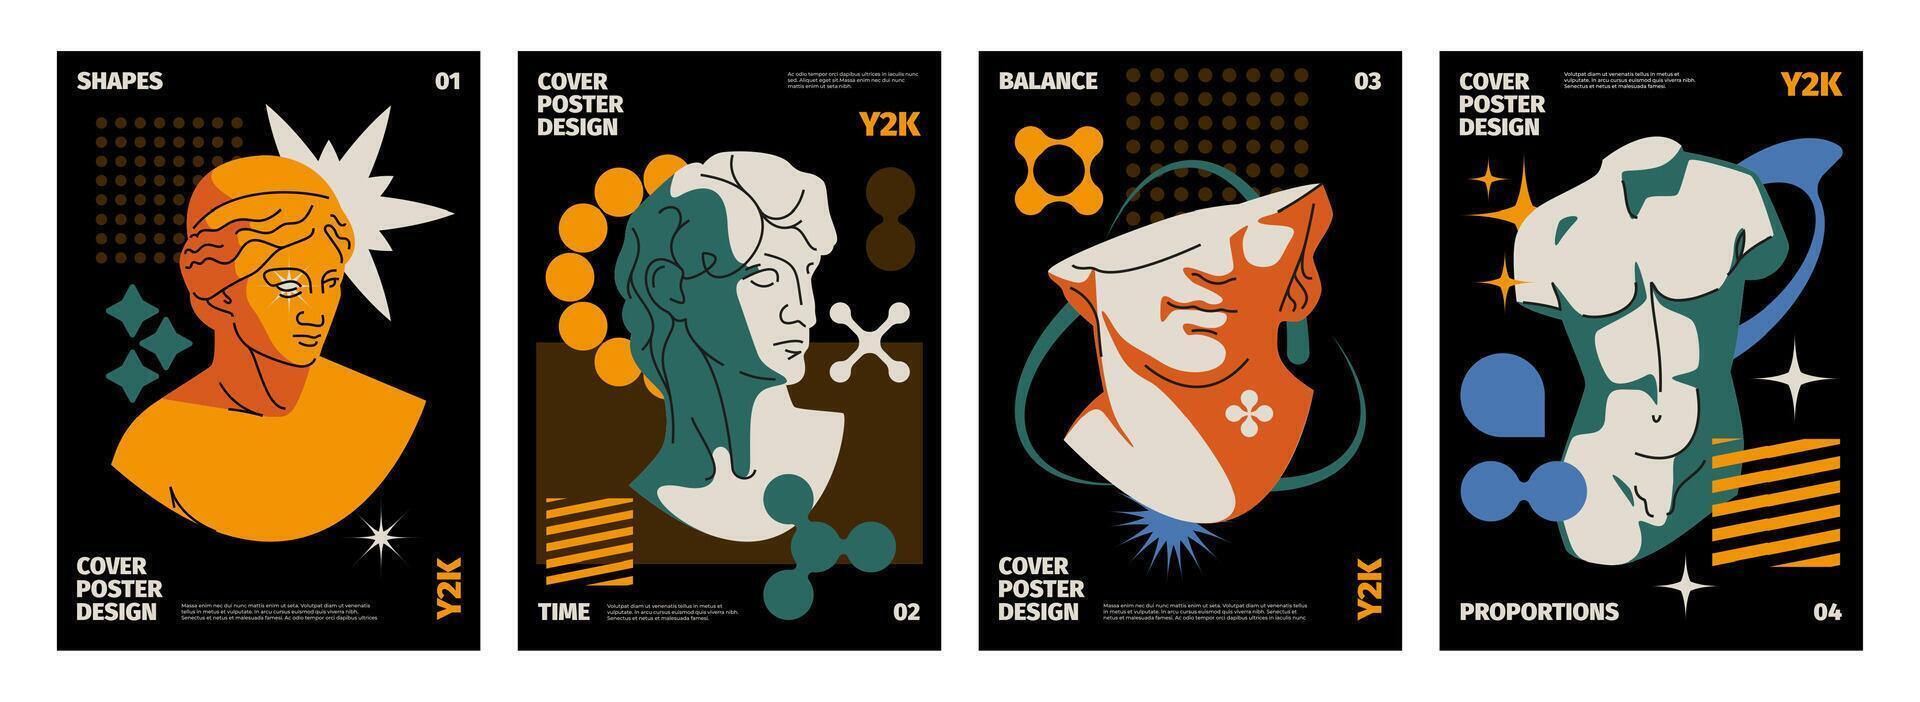 y2k omslag. abstrakt modern typografi banderoller med geometrisk former och kosmisk element. vektor 90s retro skriva ut design layout